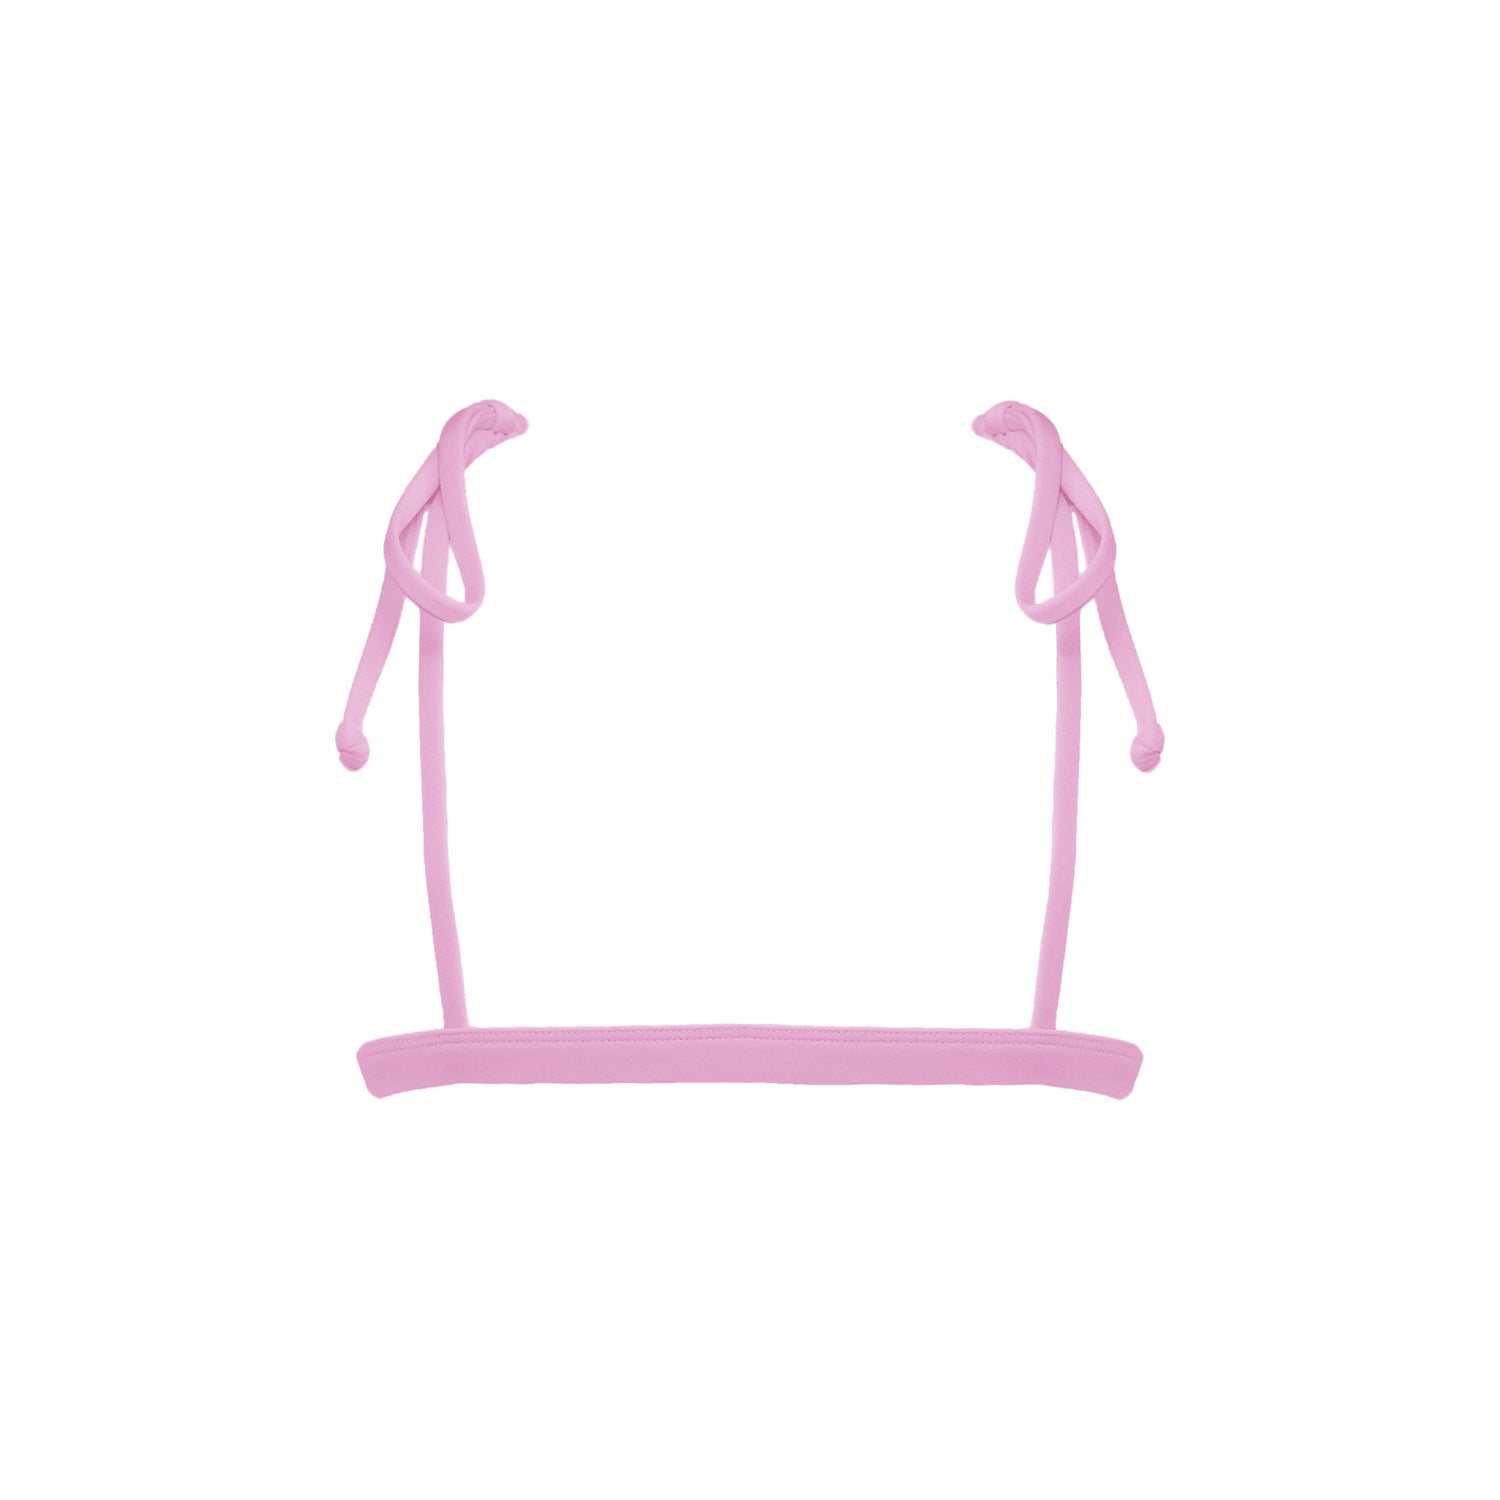 Back view of pastel pink Capri bralette style bikini top with adjustable tie shoulder straps.